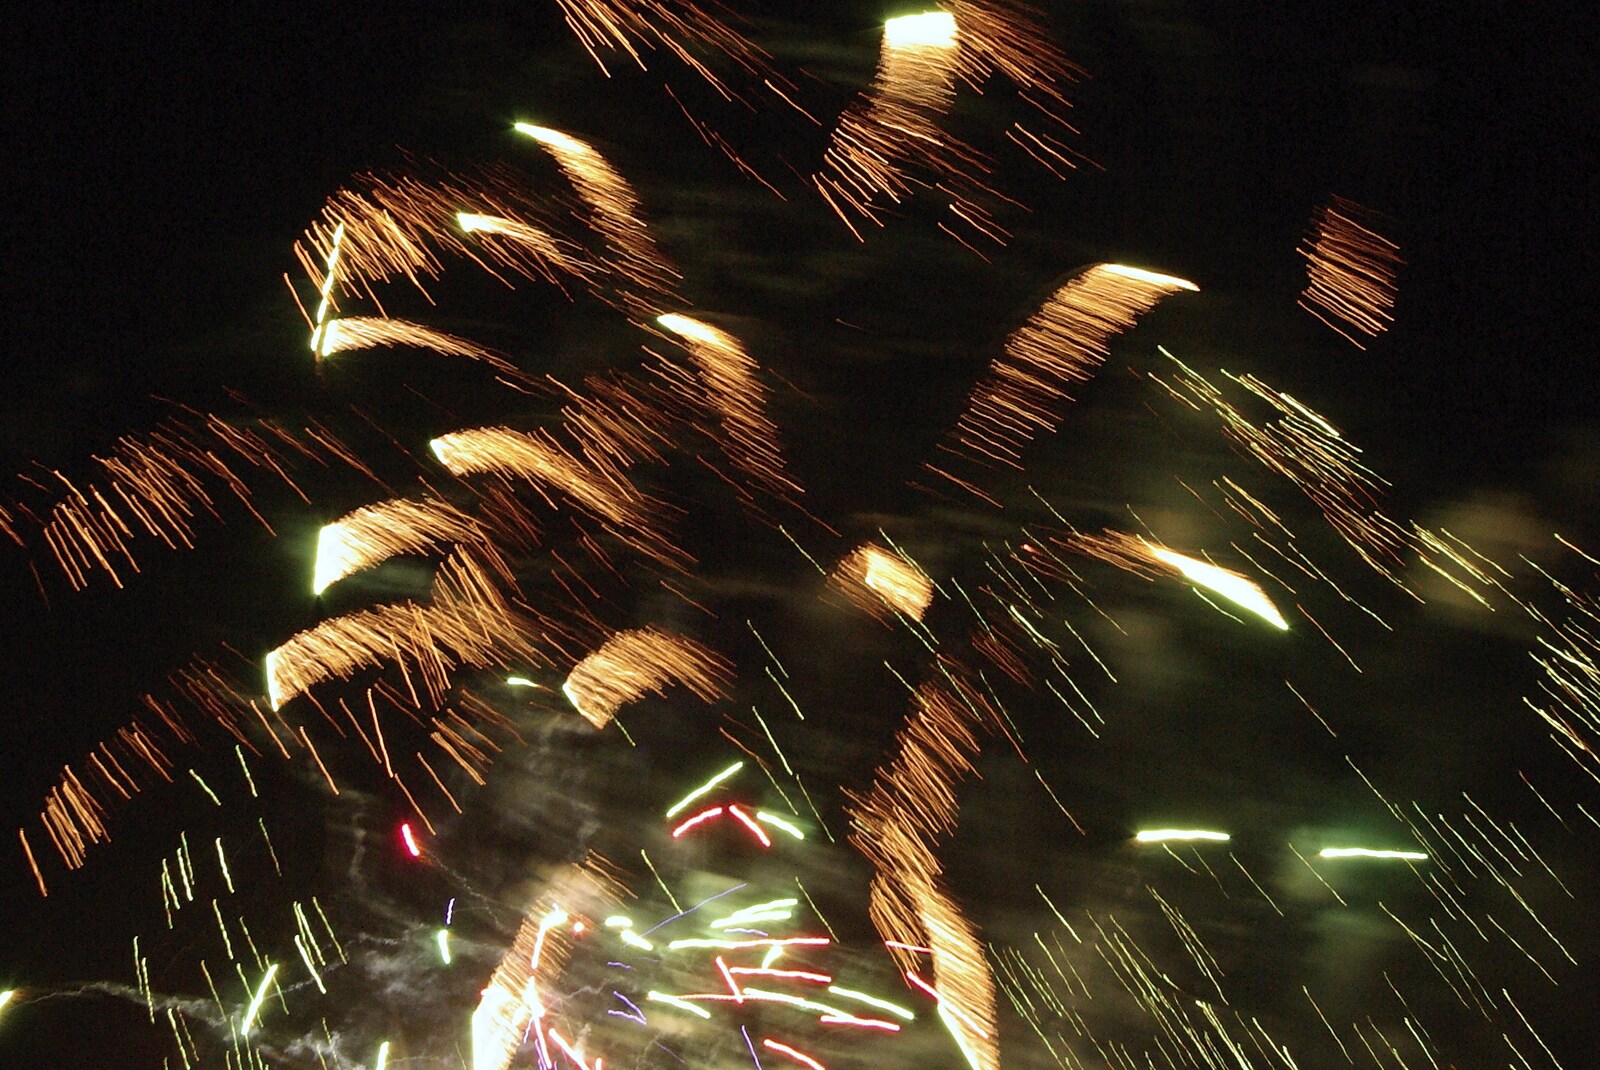 Cambridge Fireworks, and Dinner at Caroline and John's, Cambridge - 5th November 2007: Trails of sparks